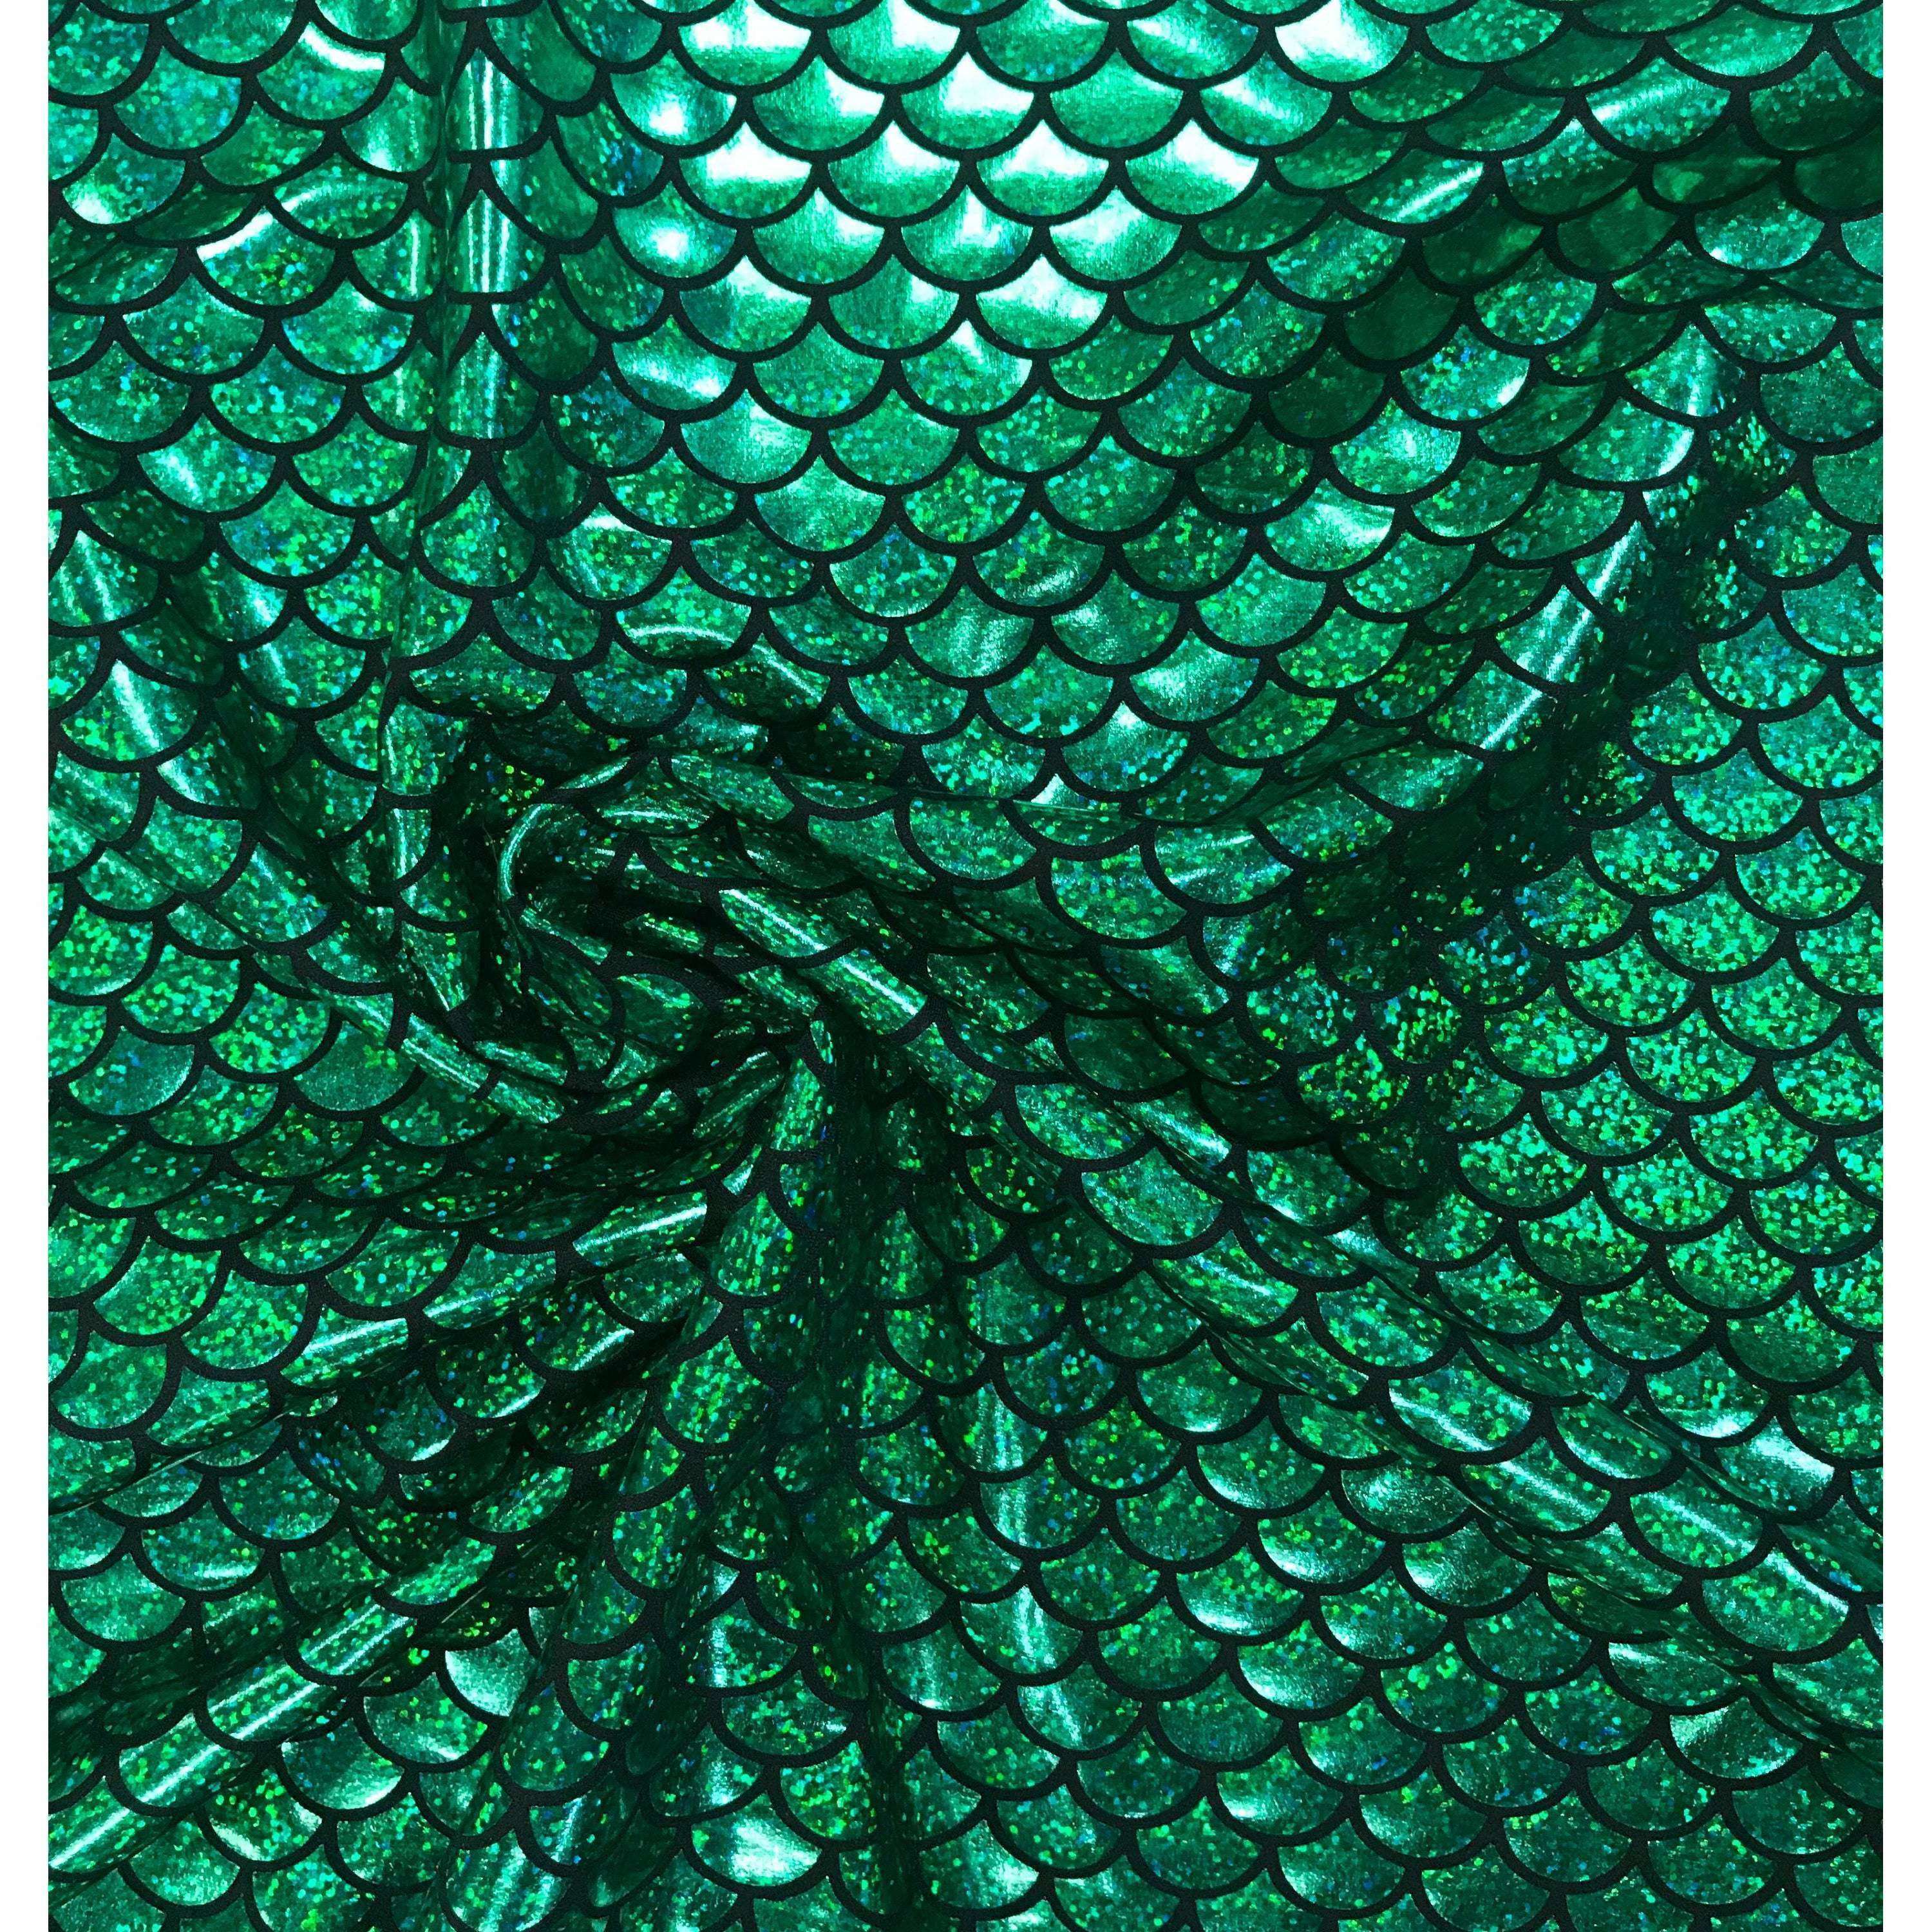 Mermaid Fabric, Shop Mermaid Fabric Designs